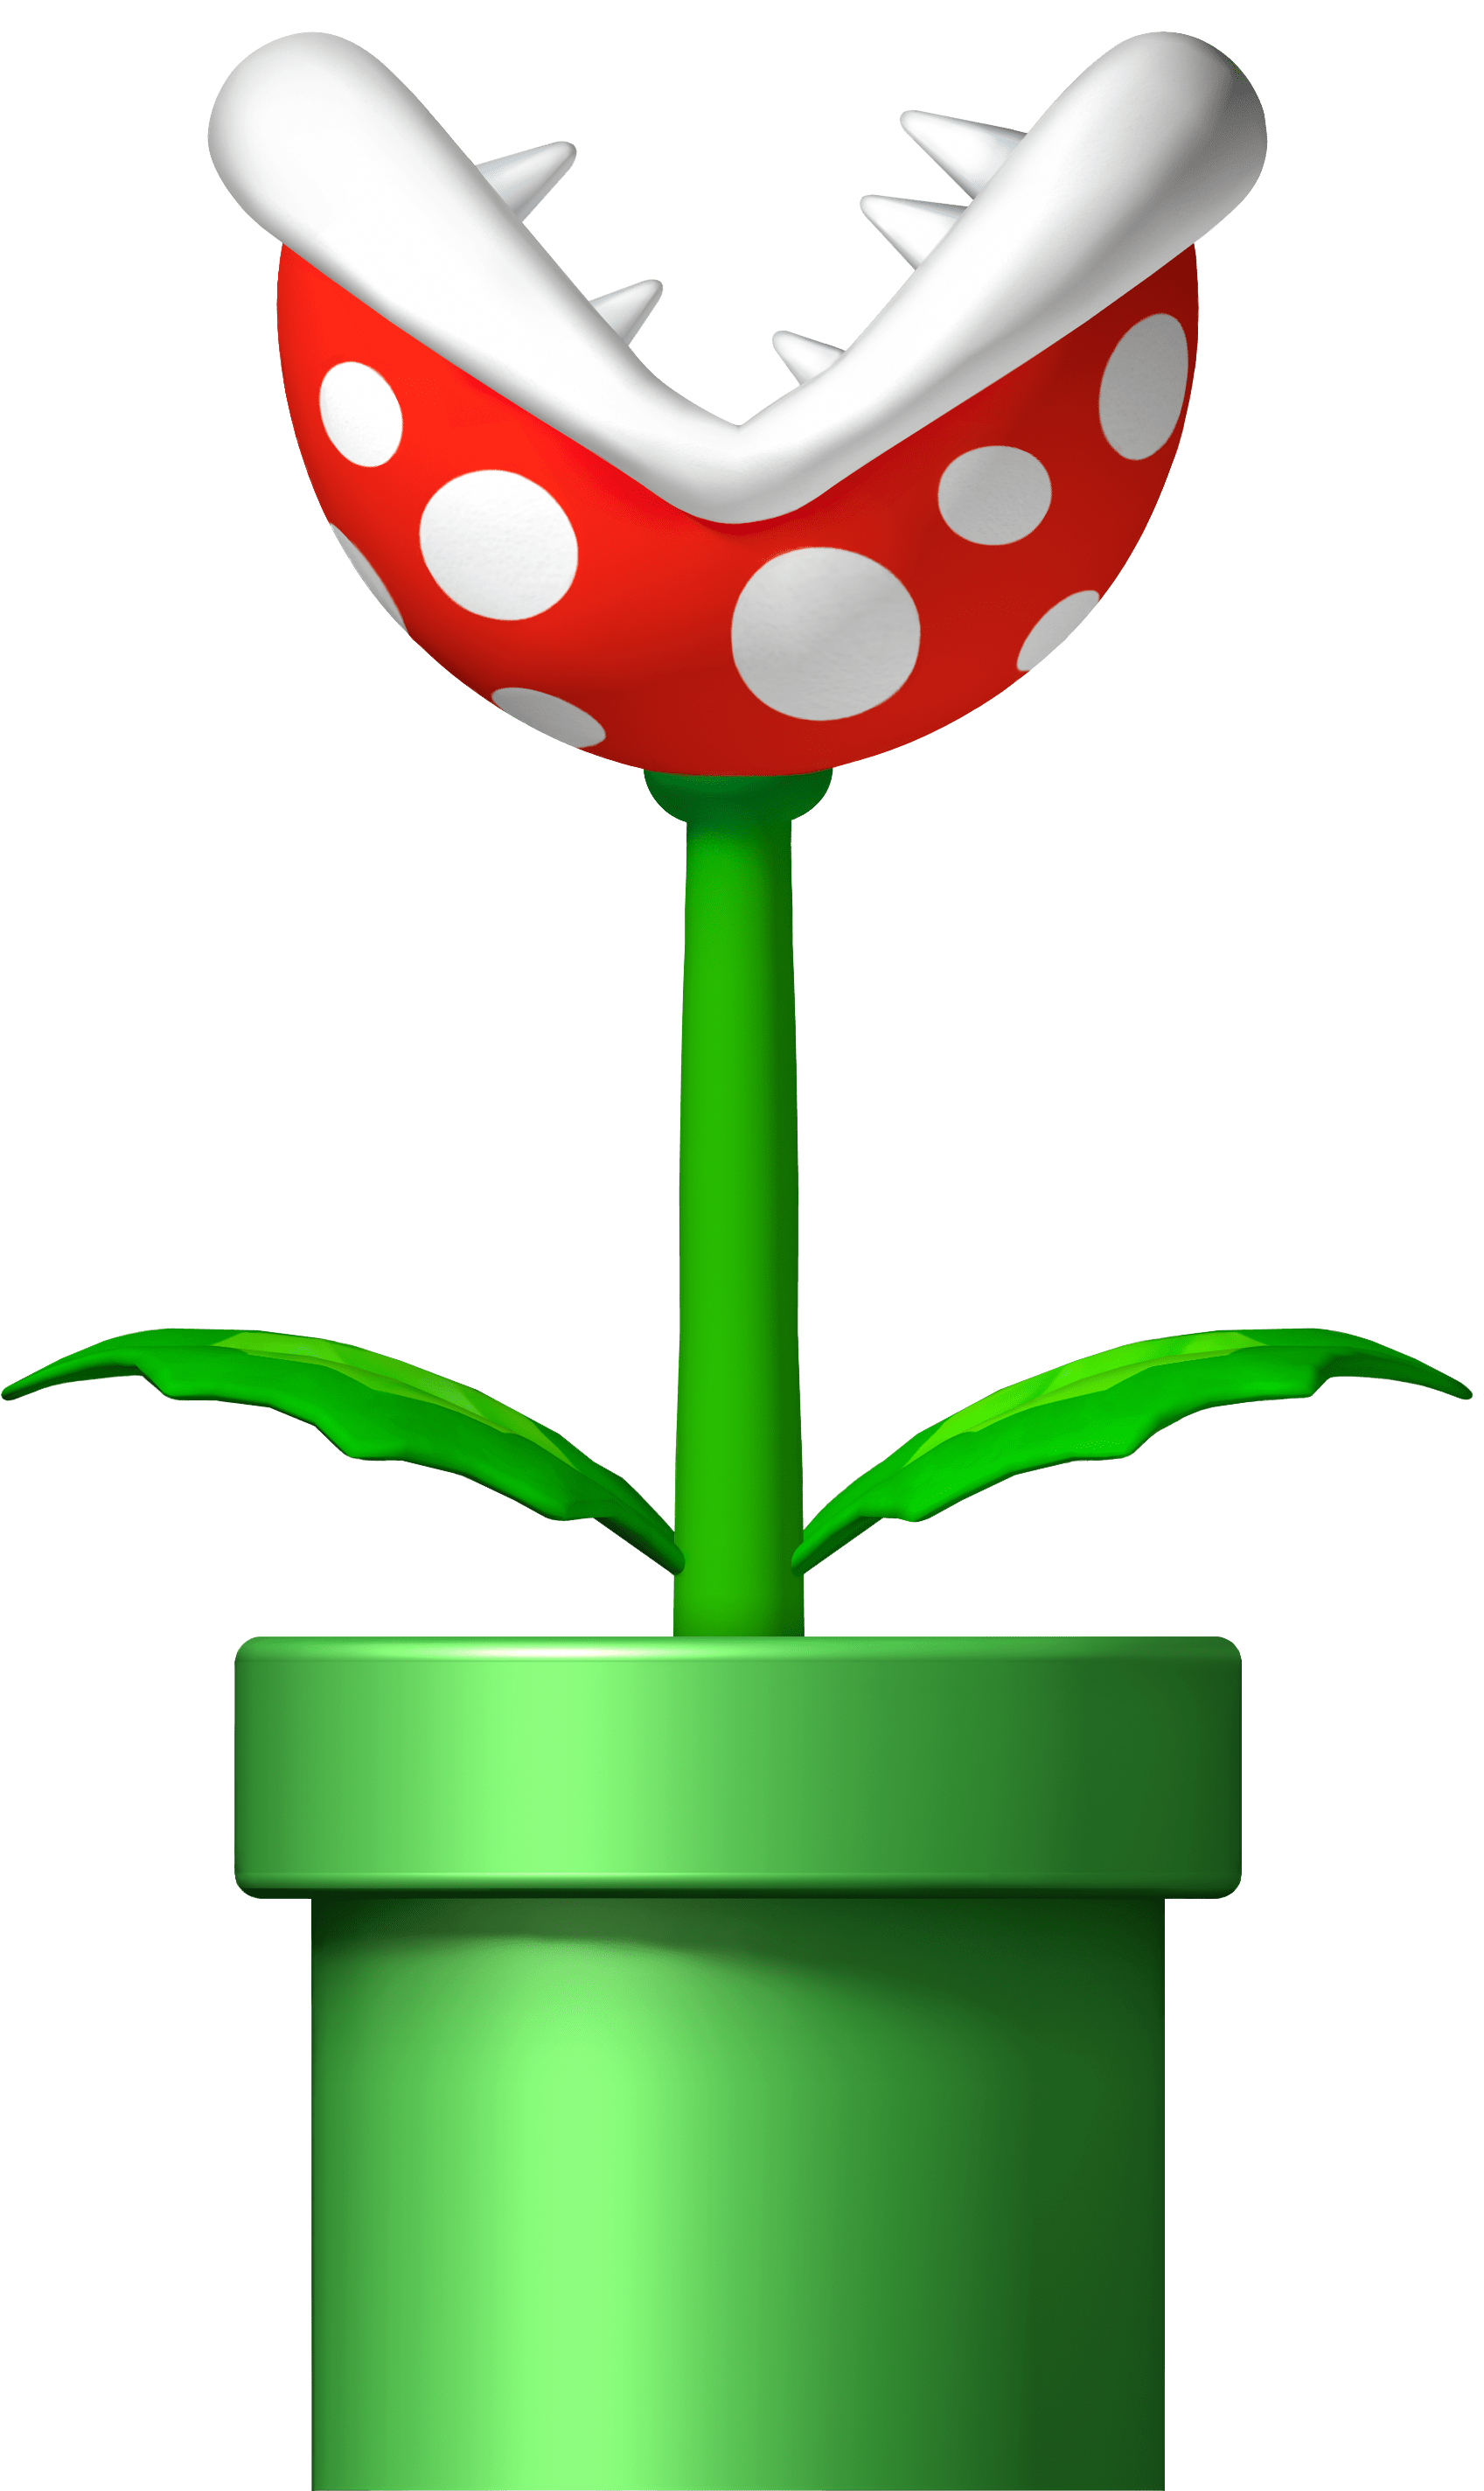 Doritos - Super Mario Piranha Plant (1697x2915)